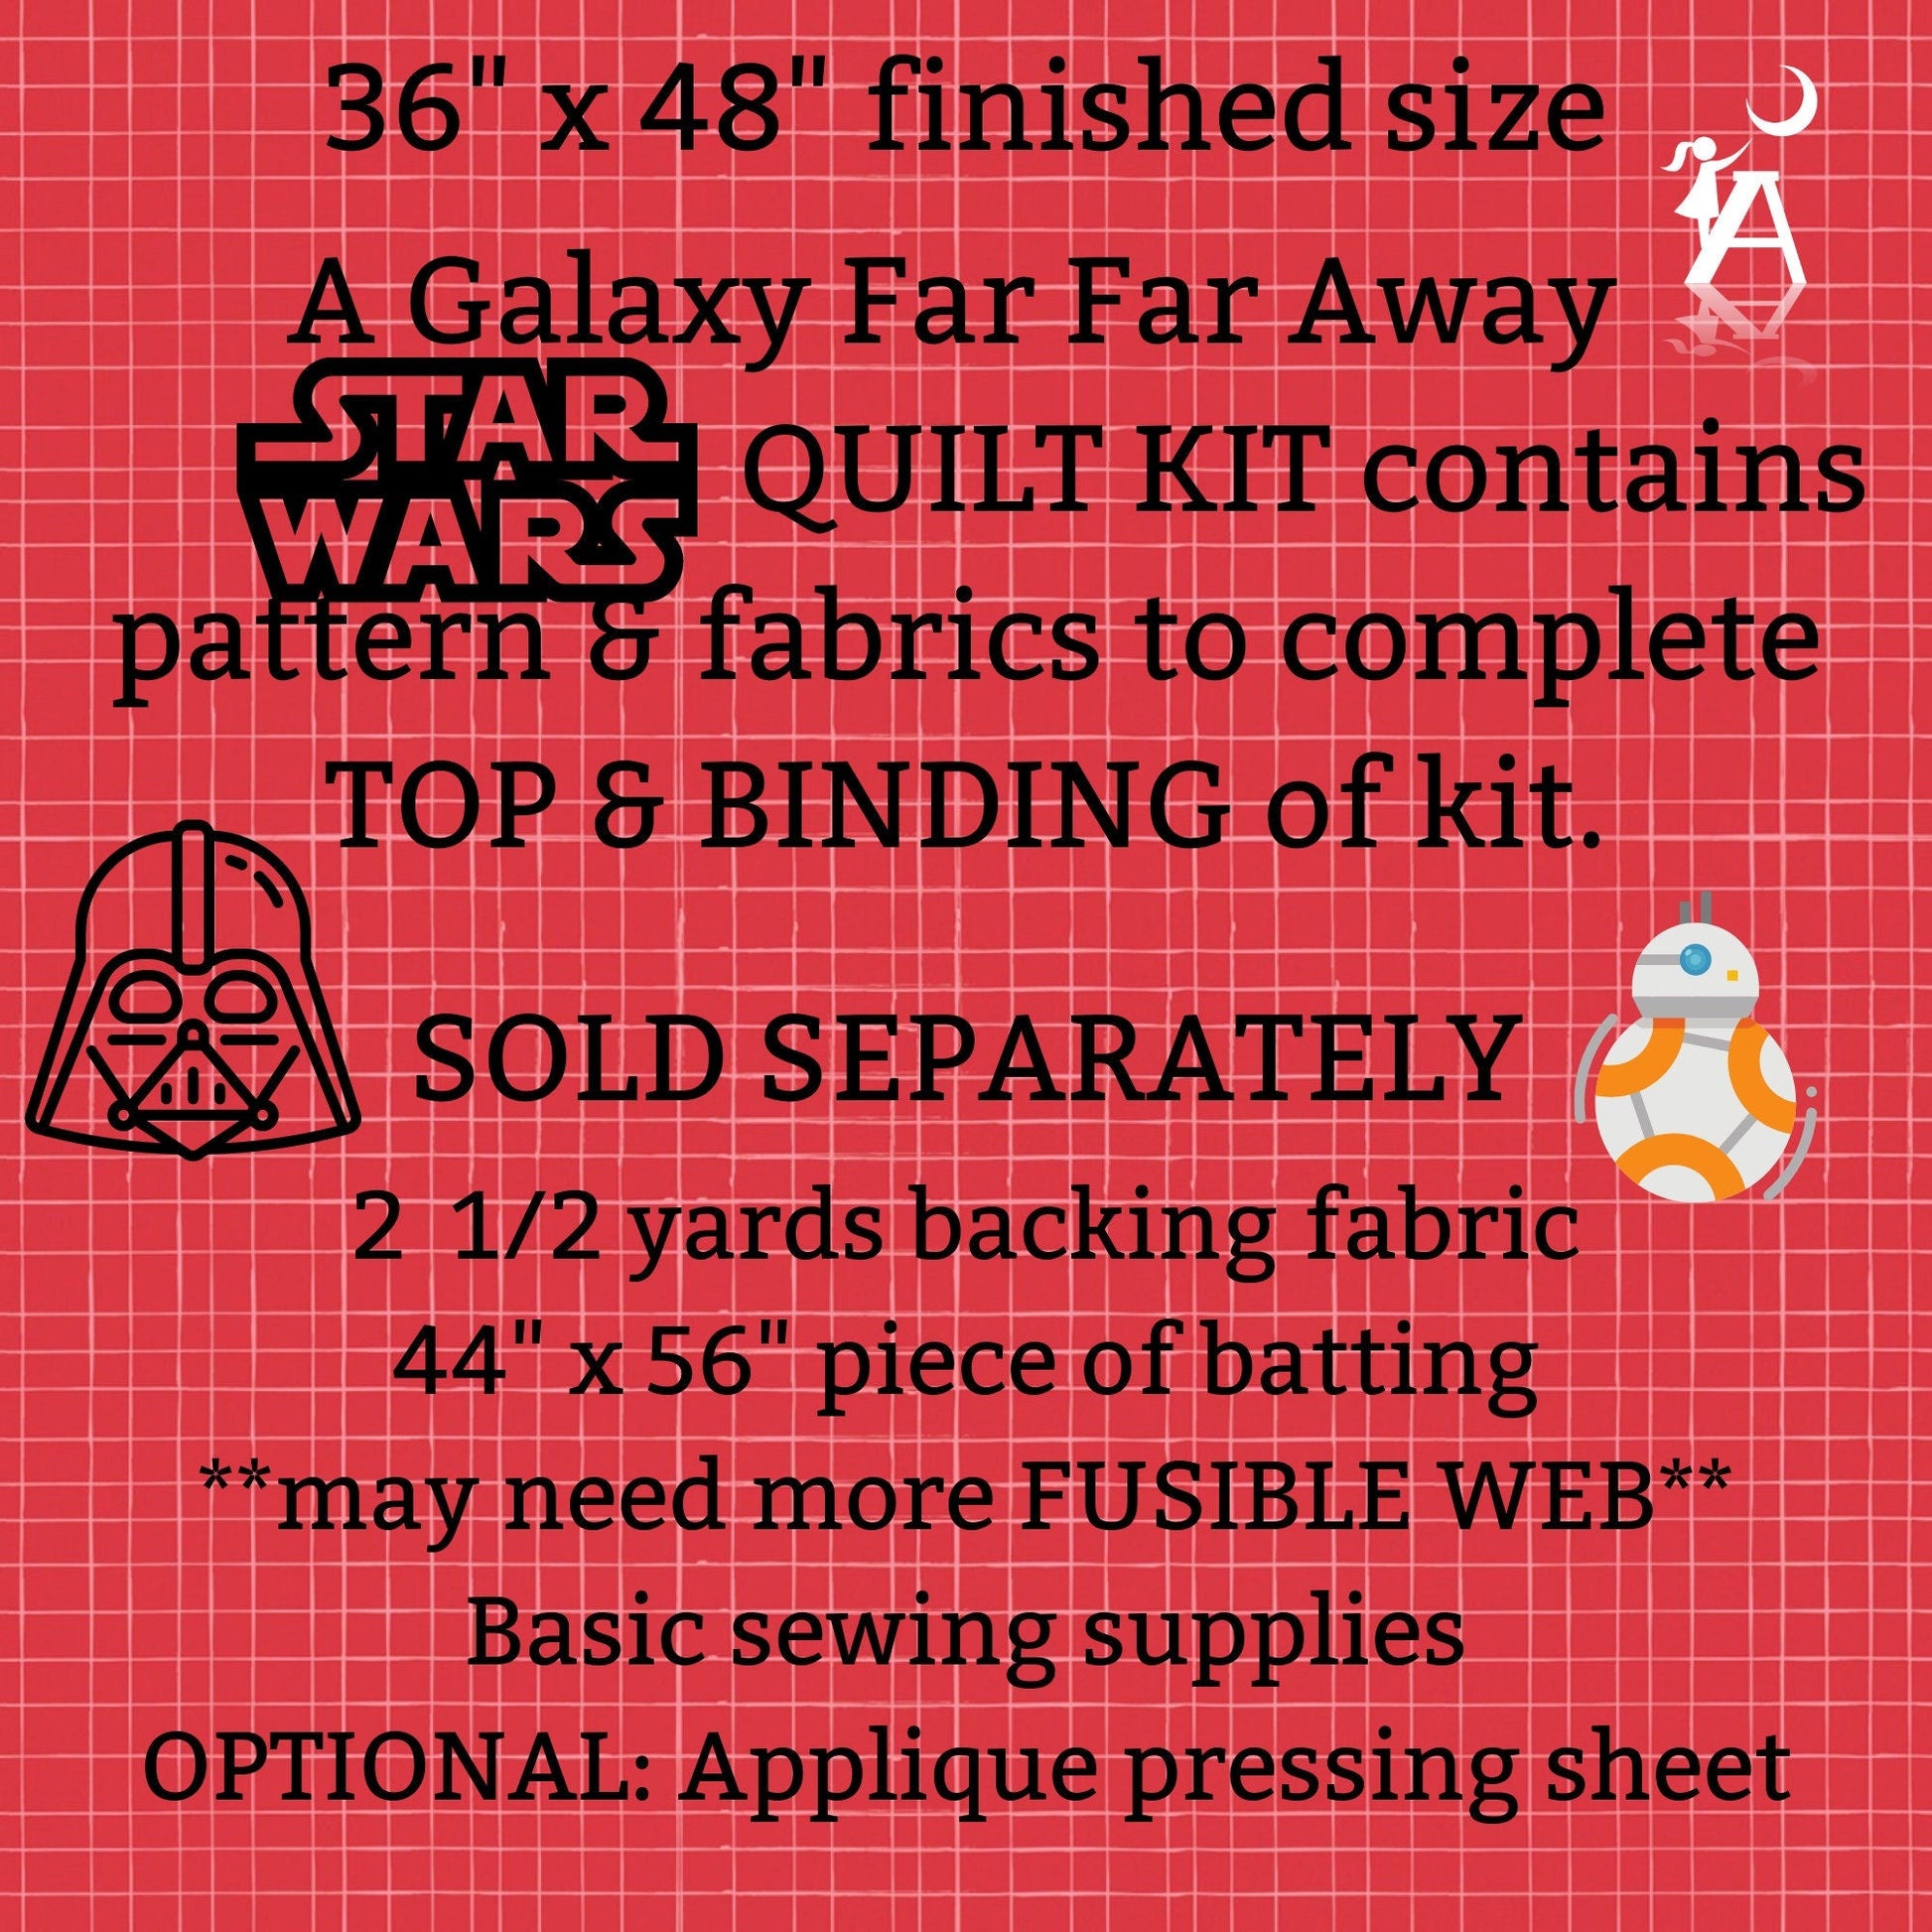 Binding Star tool Quilt Kit - Make your own kit!